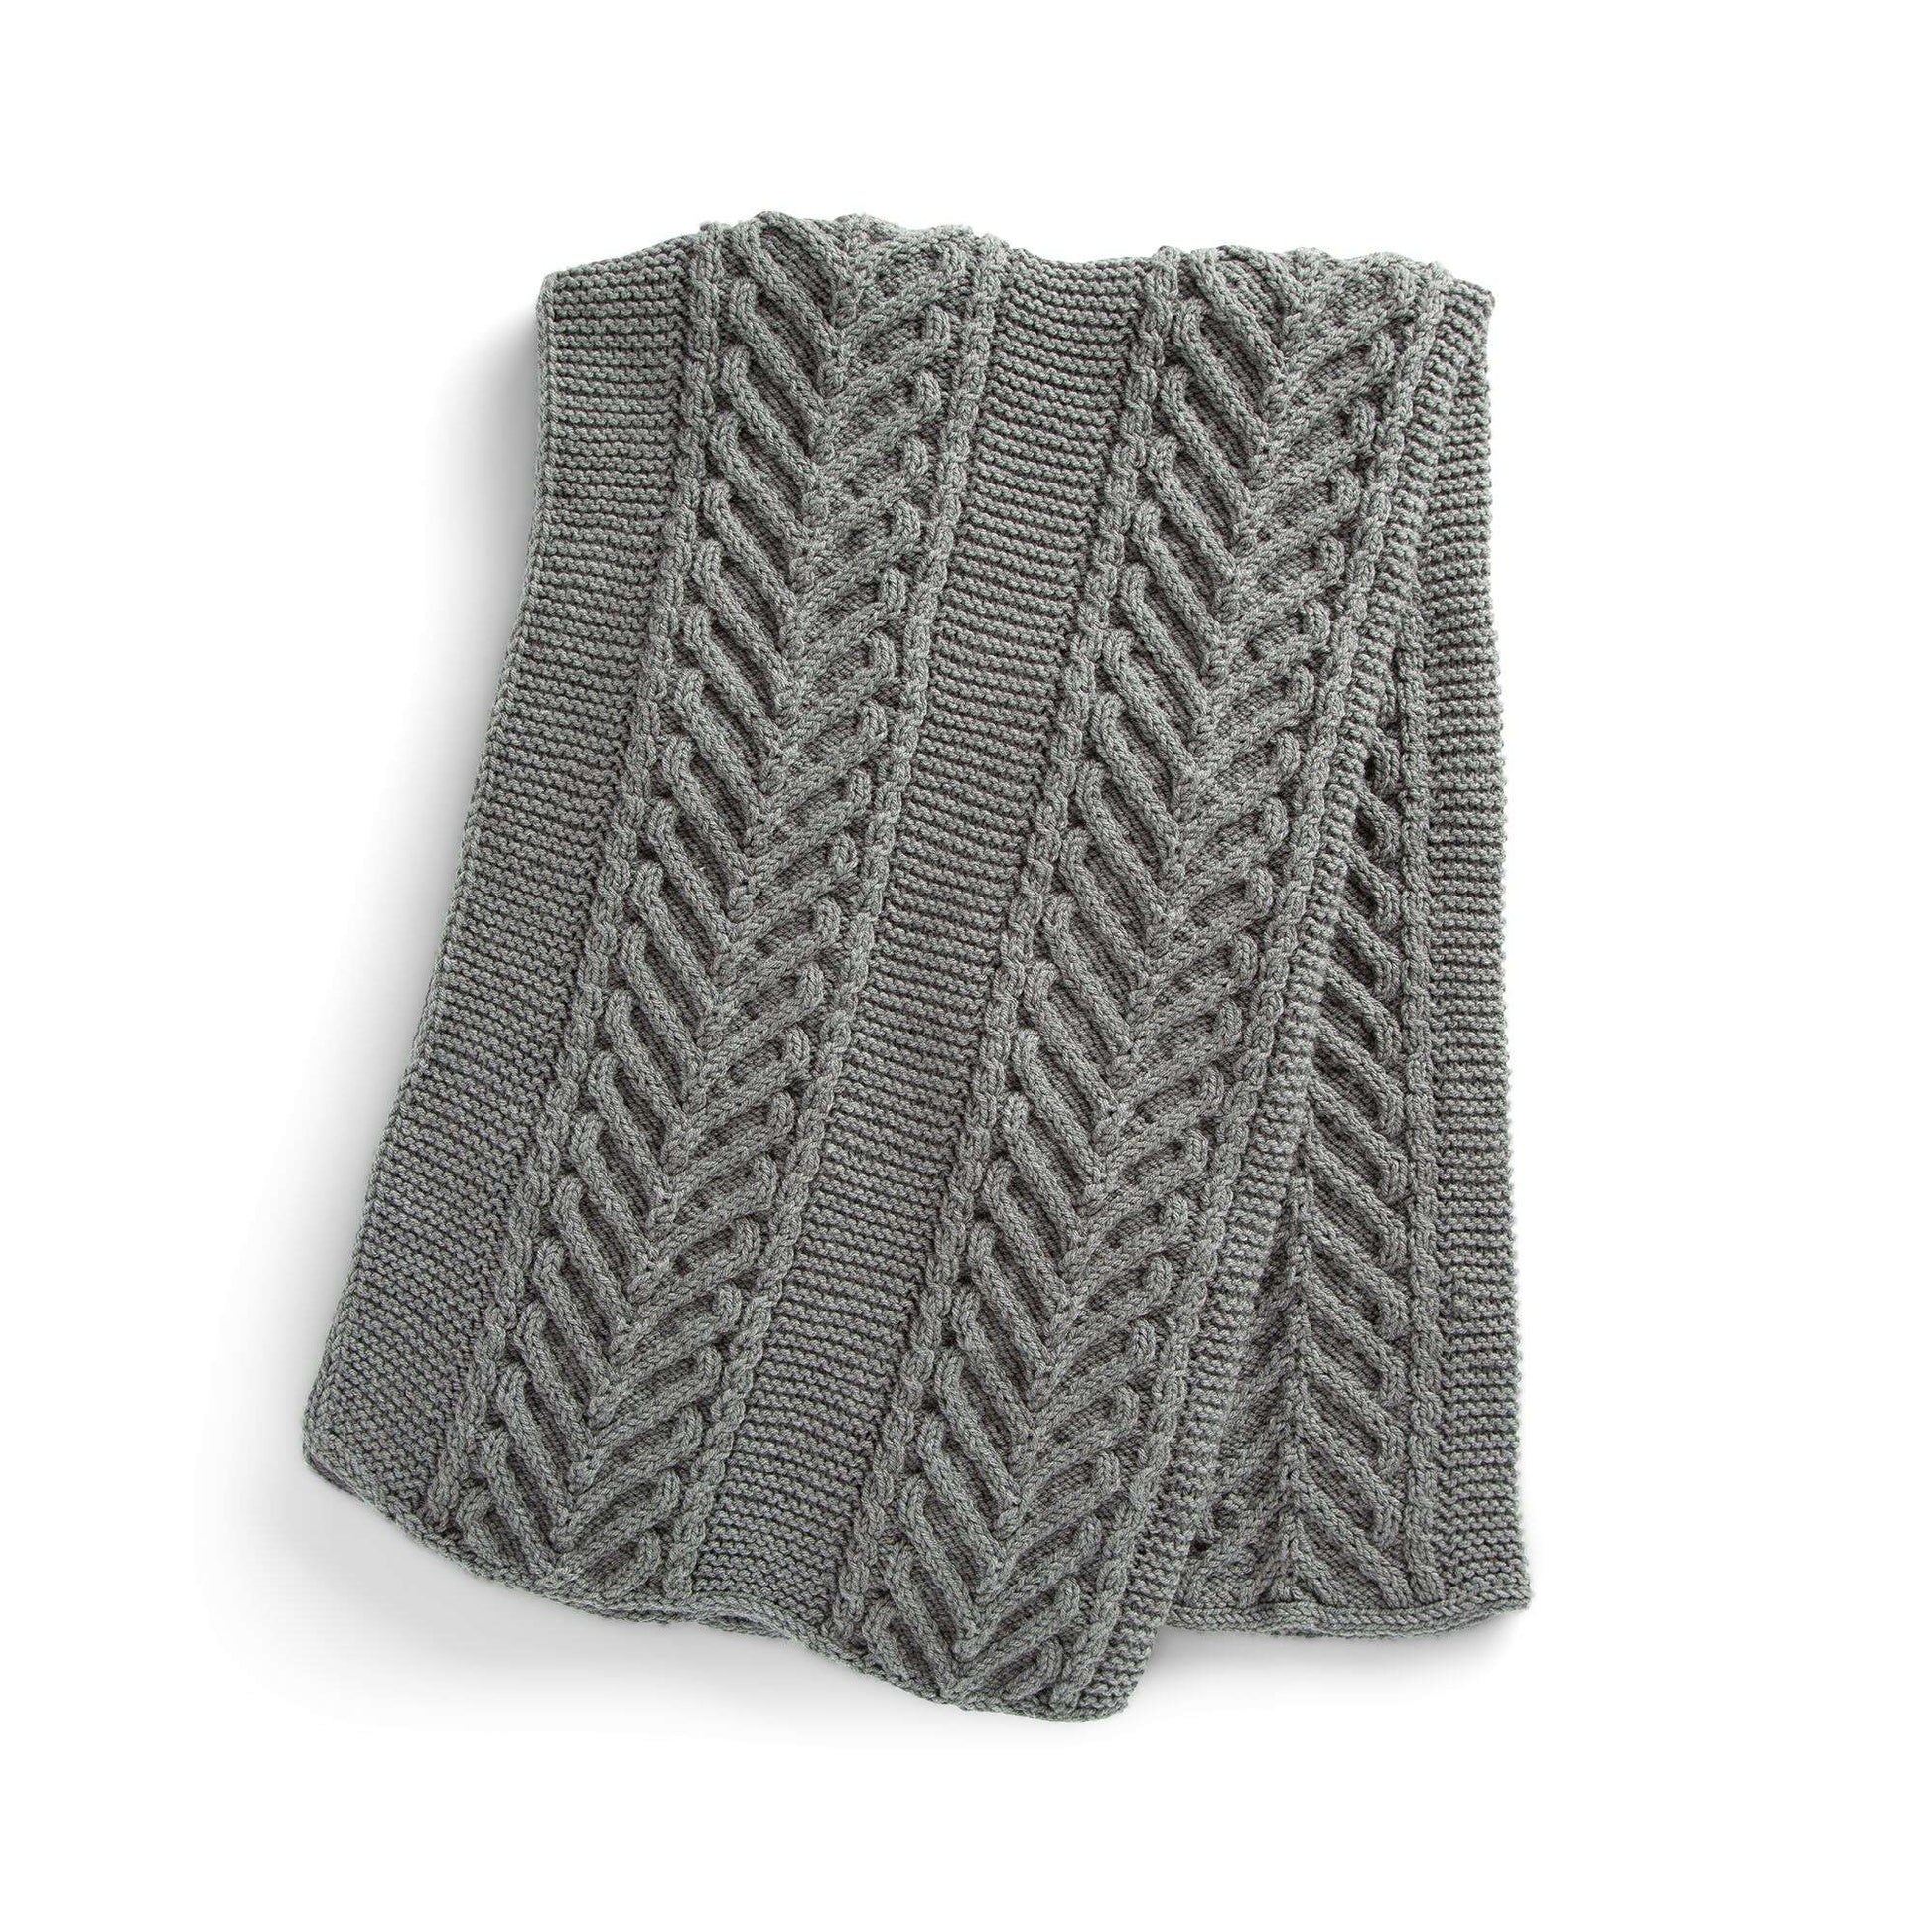 Free Caron Ascending Braid Knit Blanket Pattern